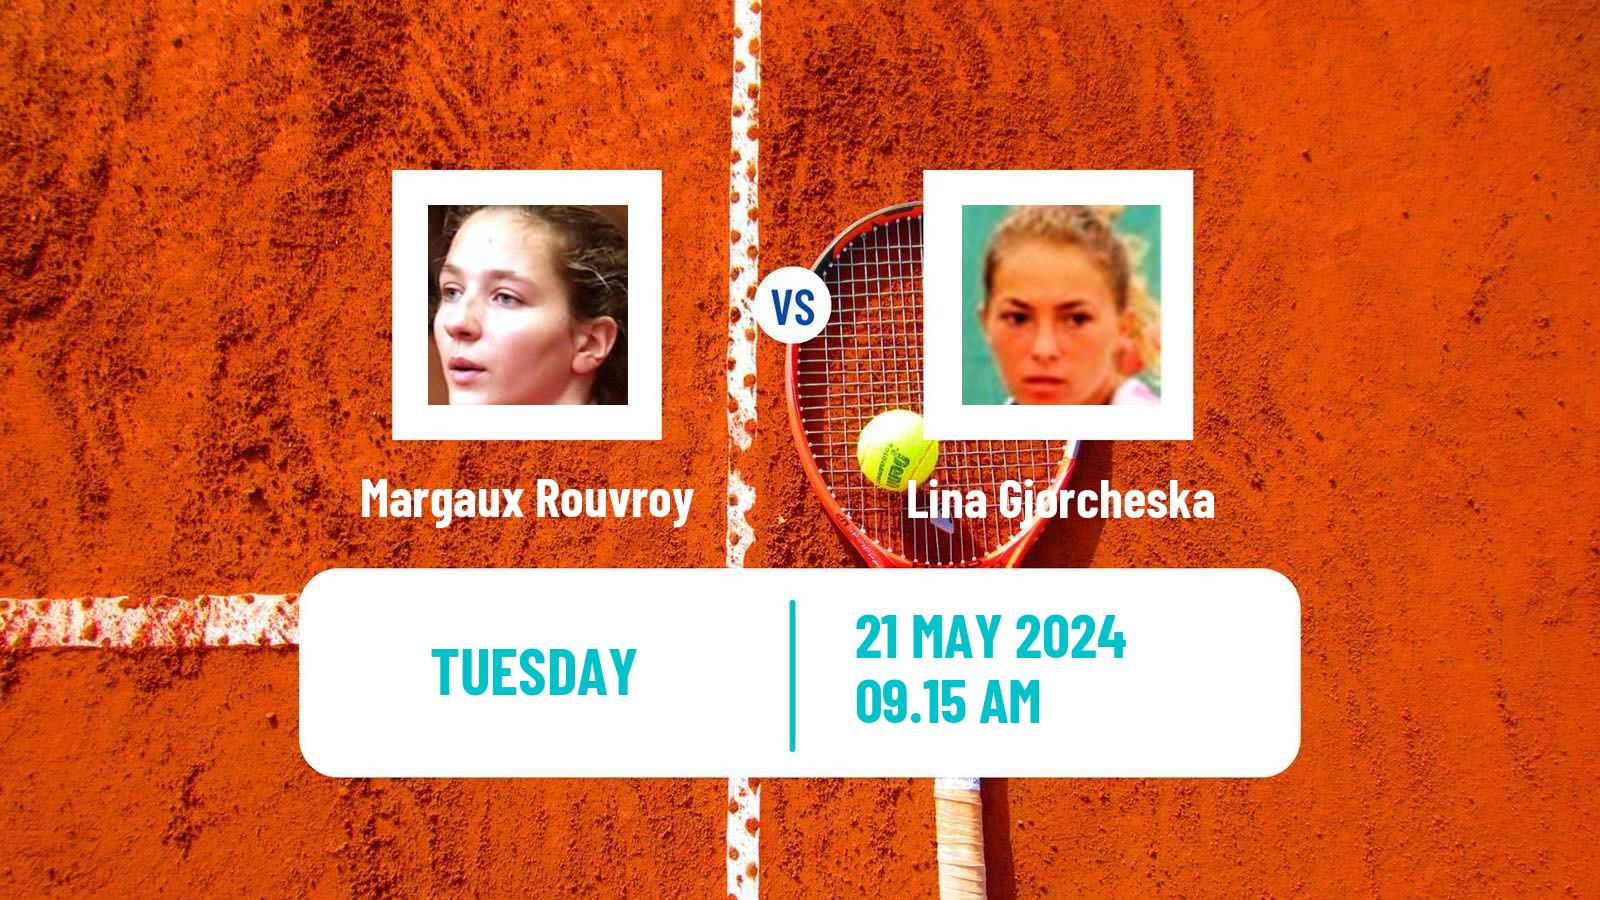 Tennis WTA Roland Garros Margaux Rouvroy - Lina Gjorcheska